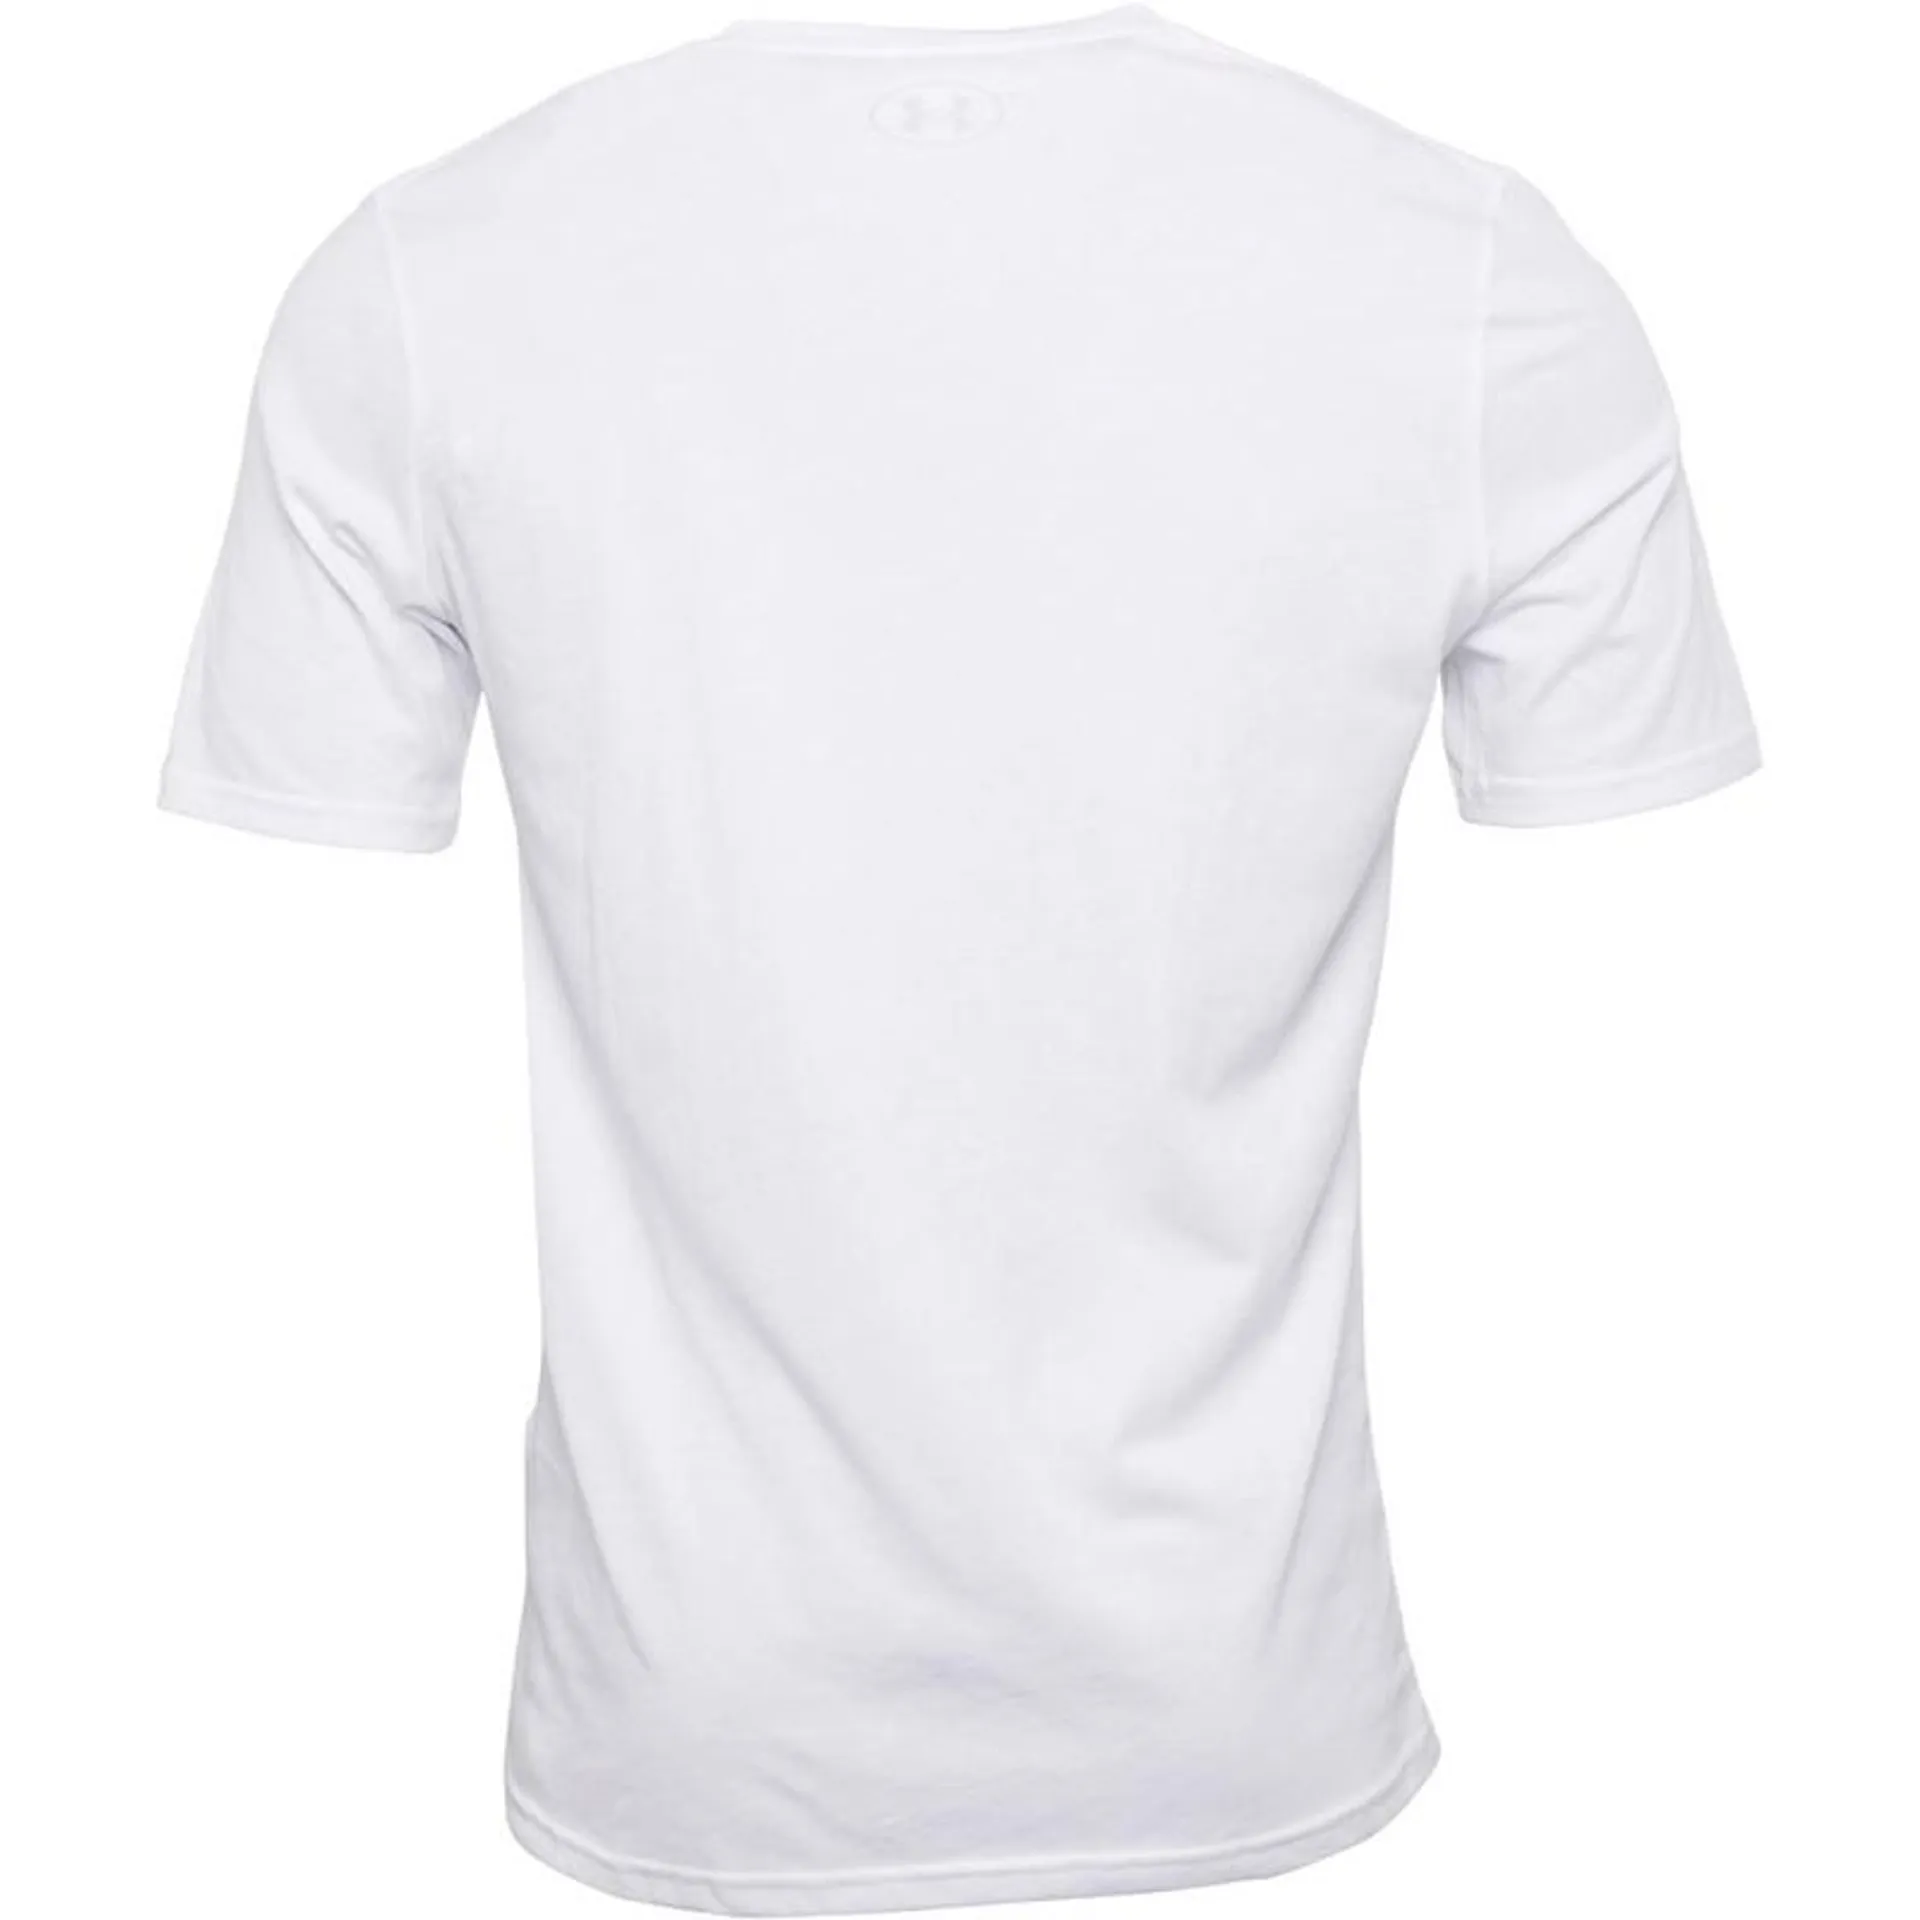 Under Armour Mens UA Team Issue Wordmark T-Shirt White